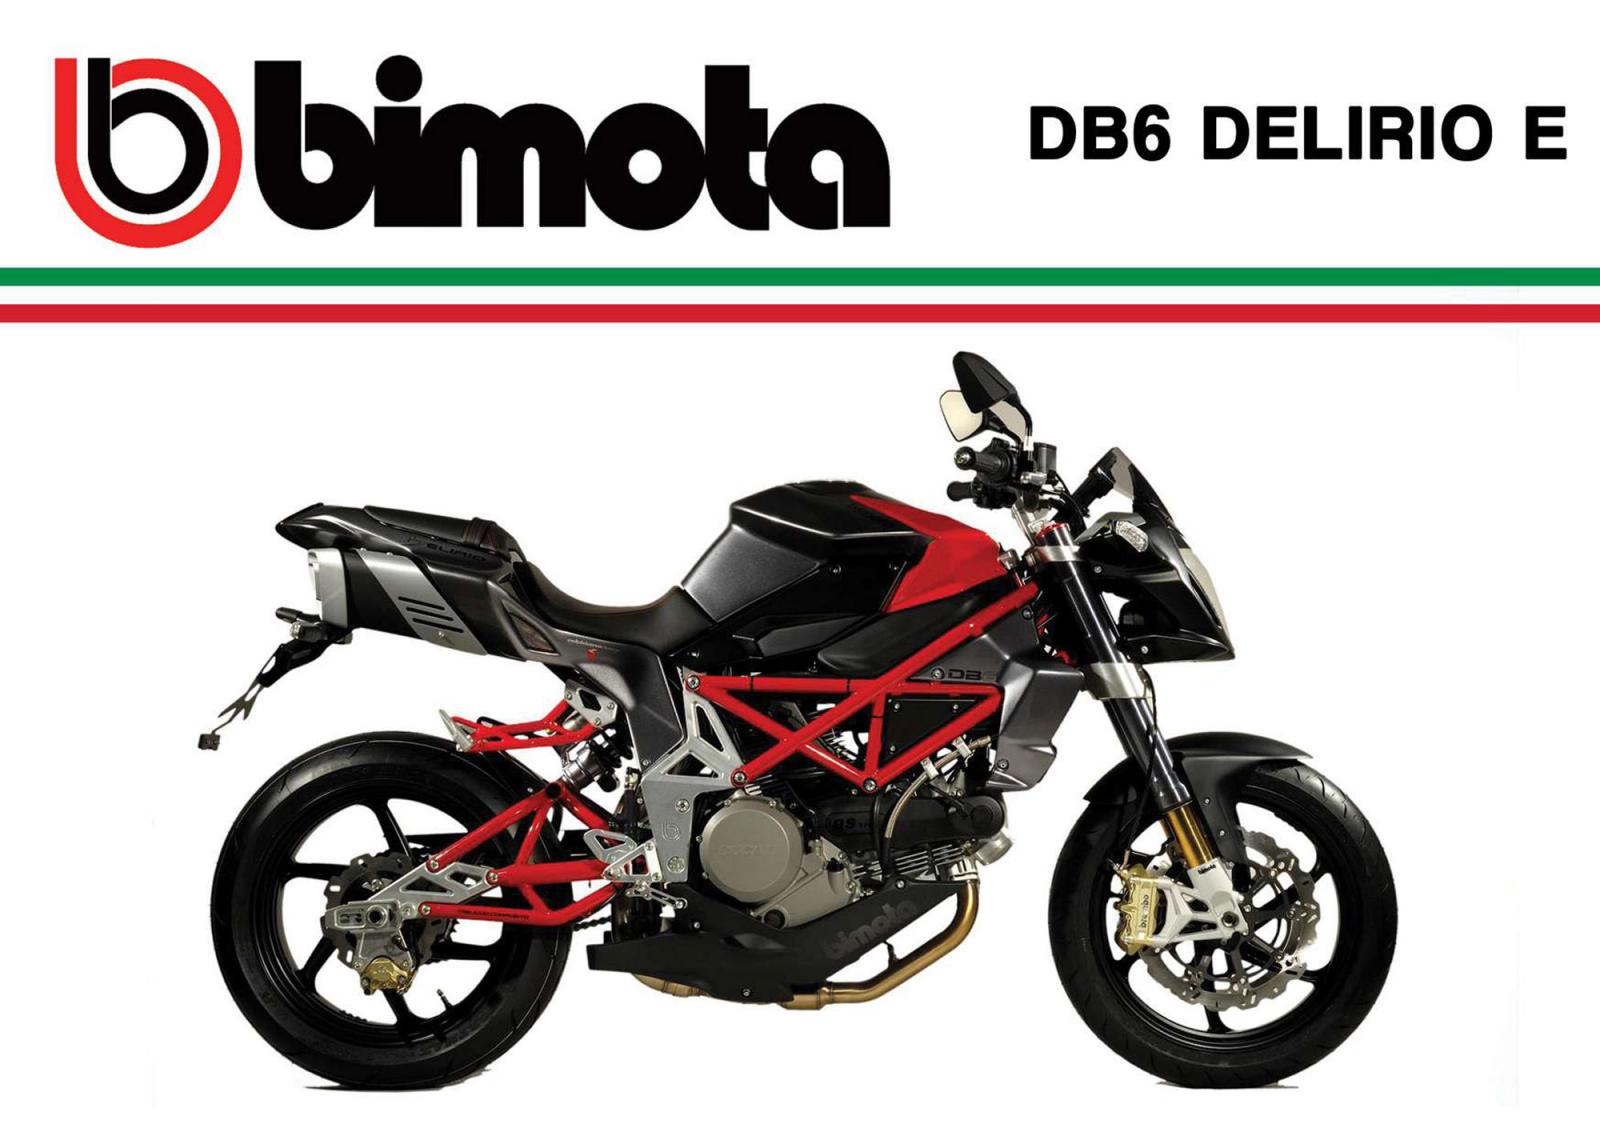 2013 bimota db6, db6 delirio e, db6 delirio re motorcycle